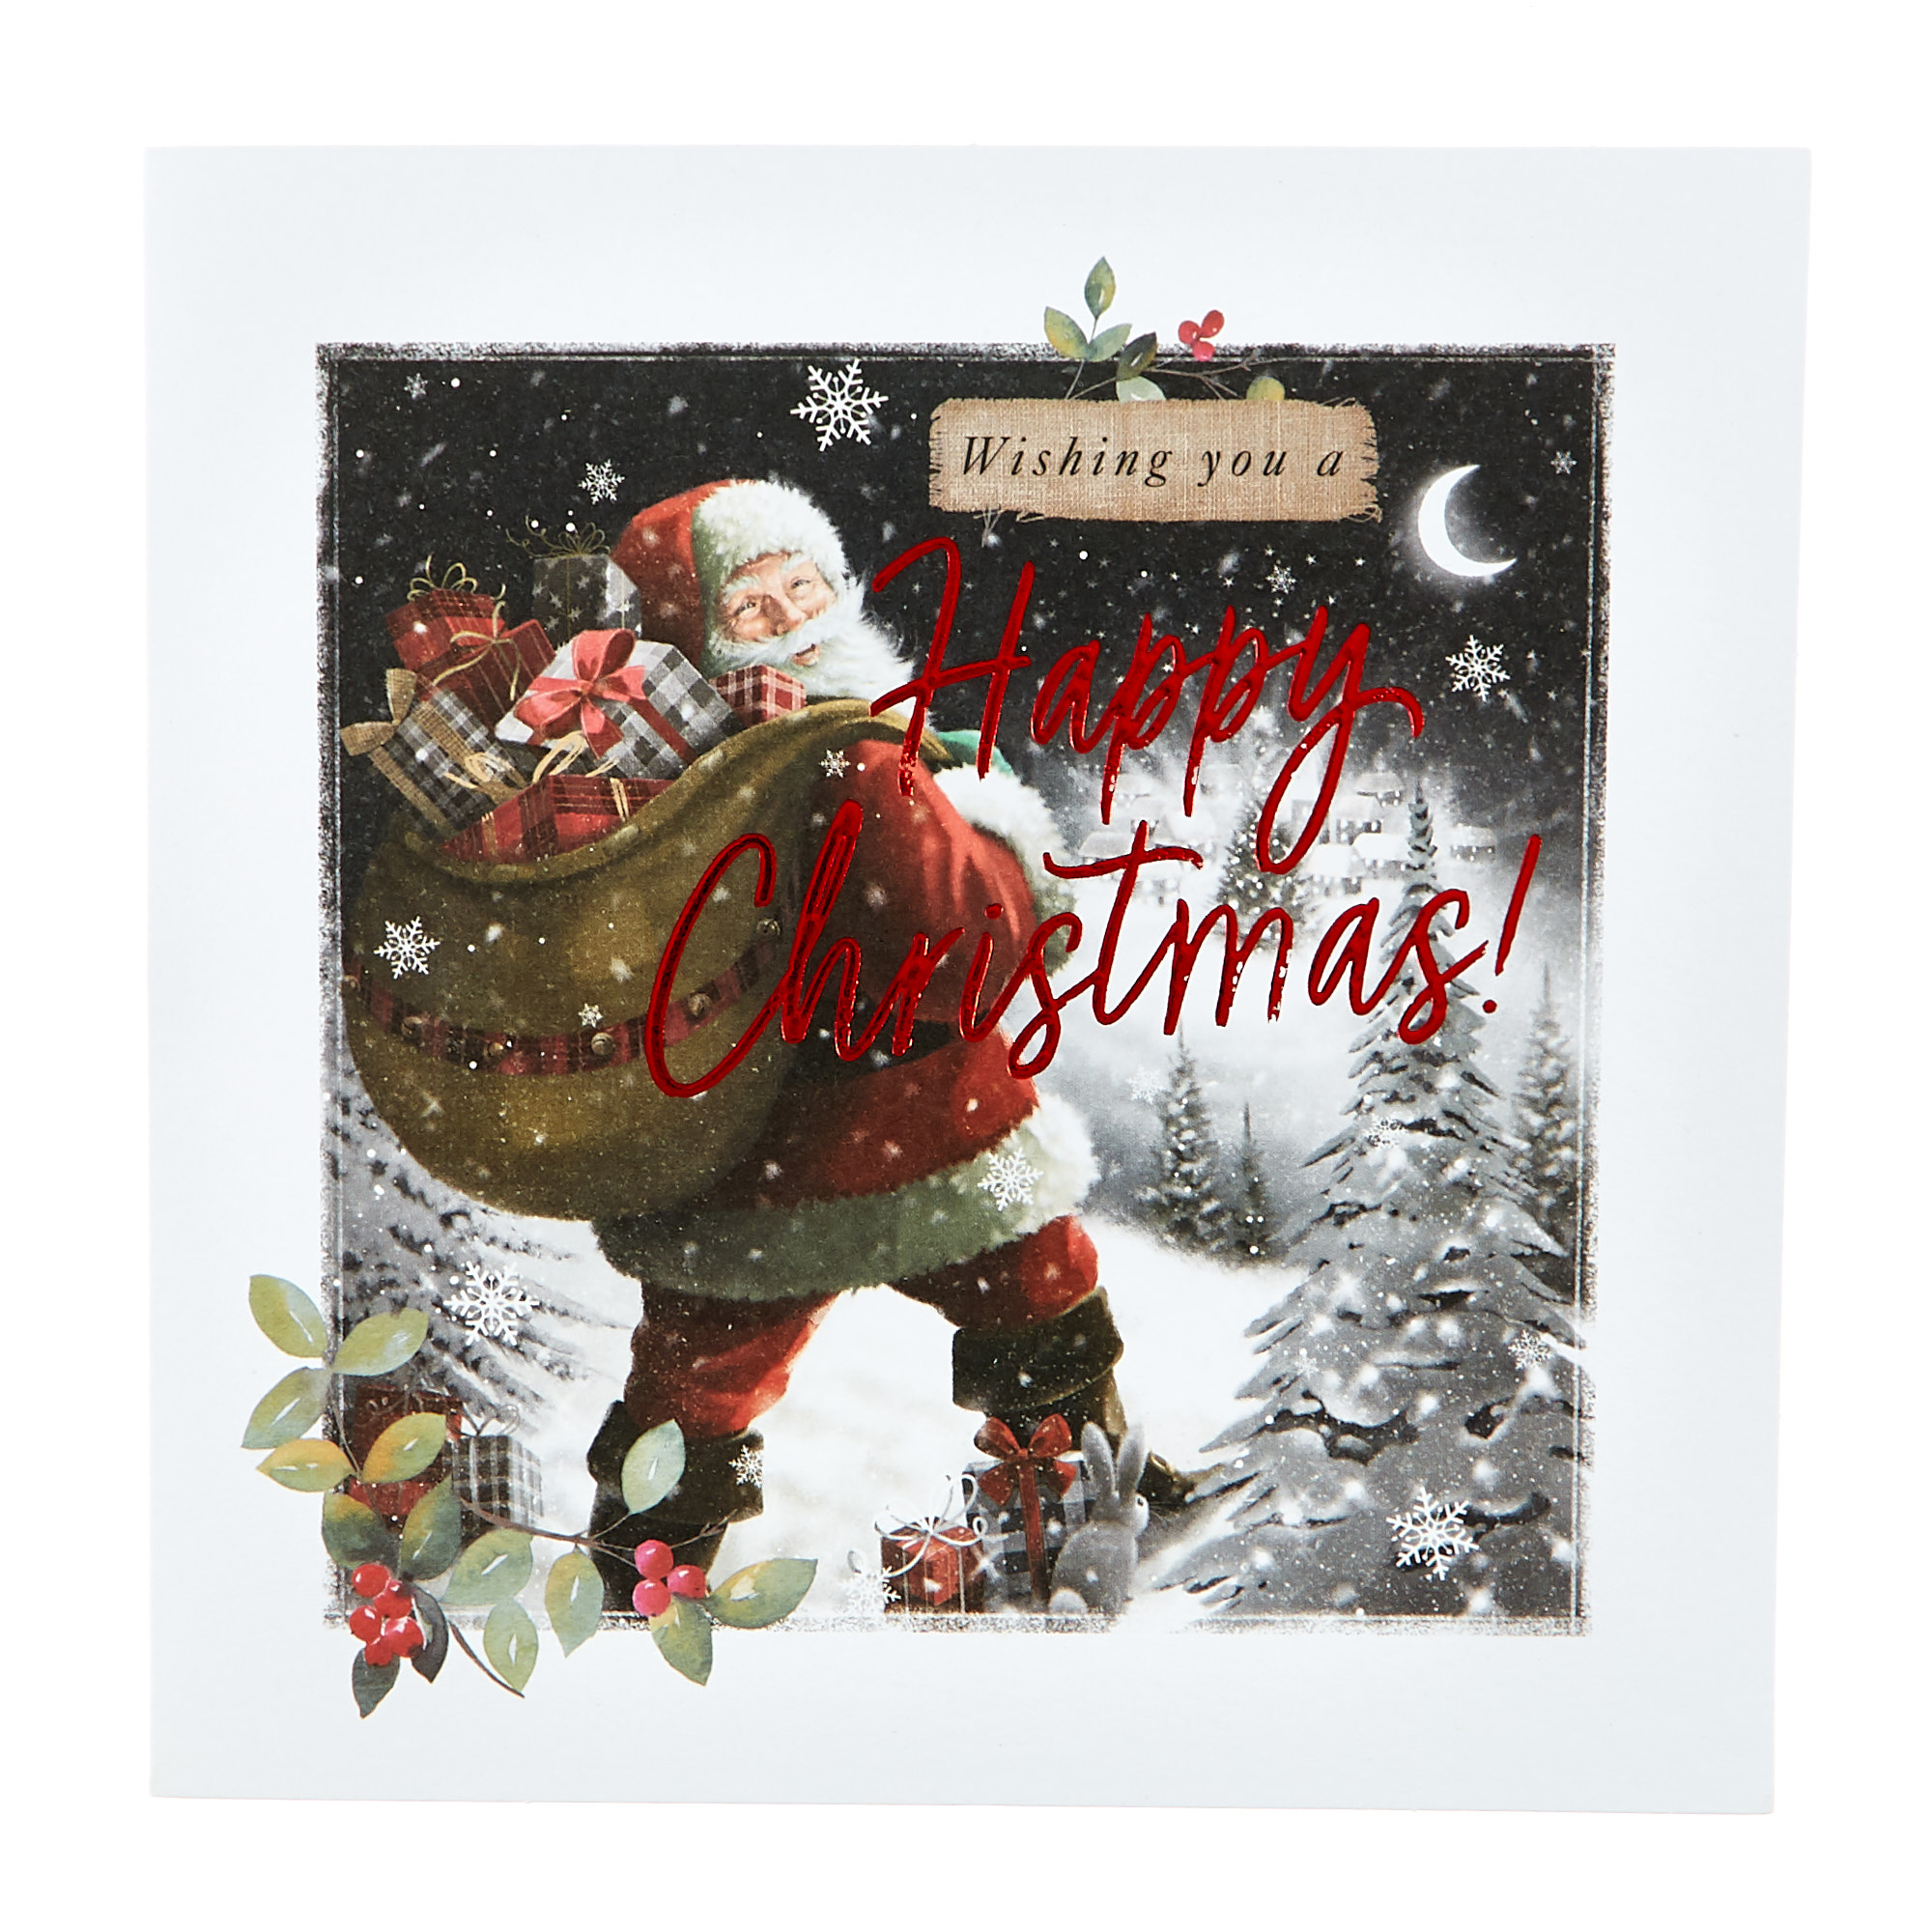 16 Charity Christmas Cards - Traditional Santa (2 Designs)